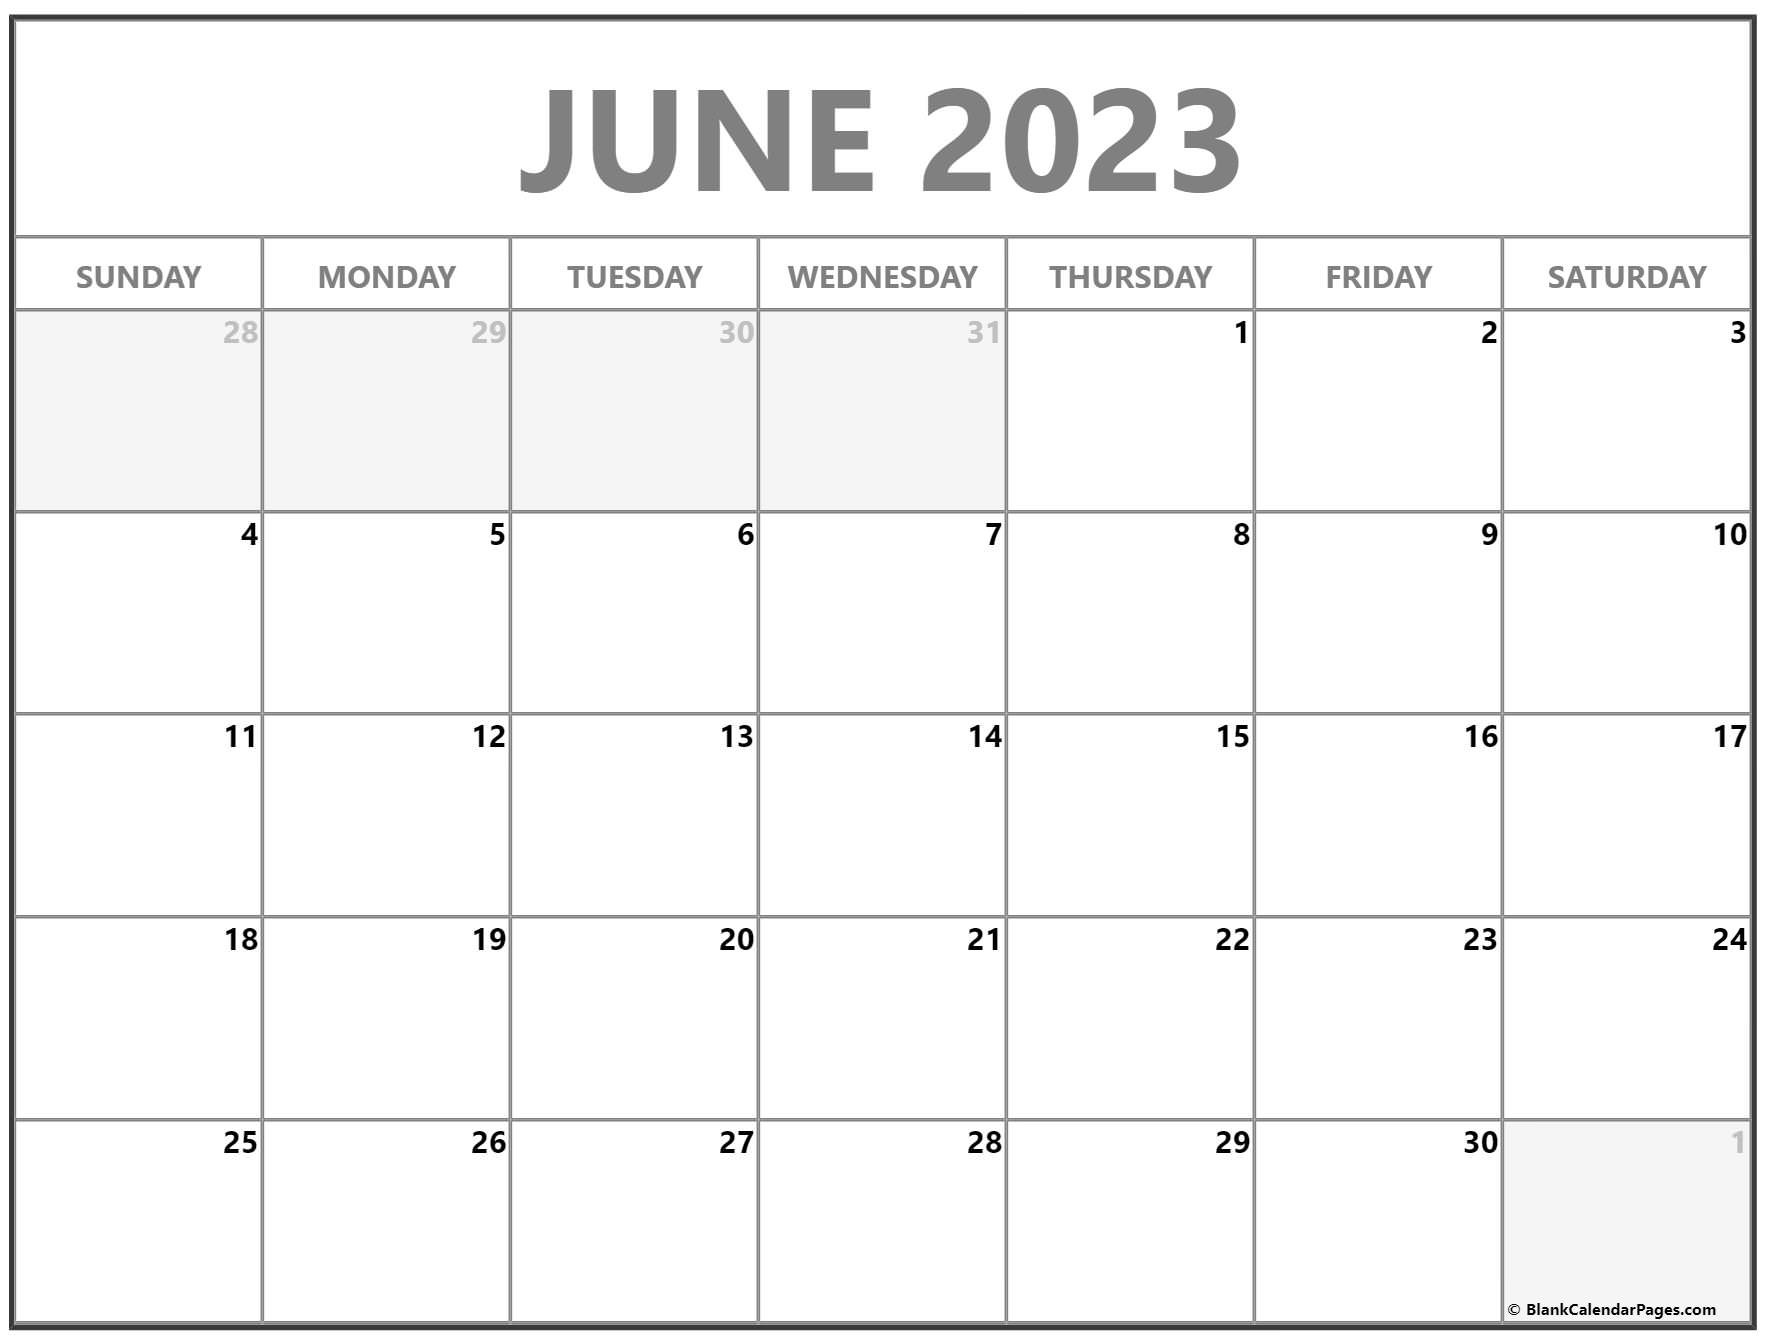 june-2023-blank-calendar